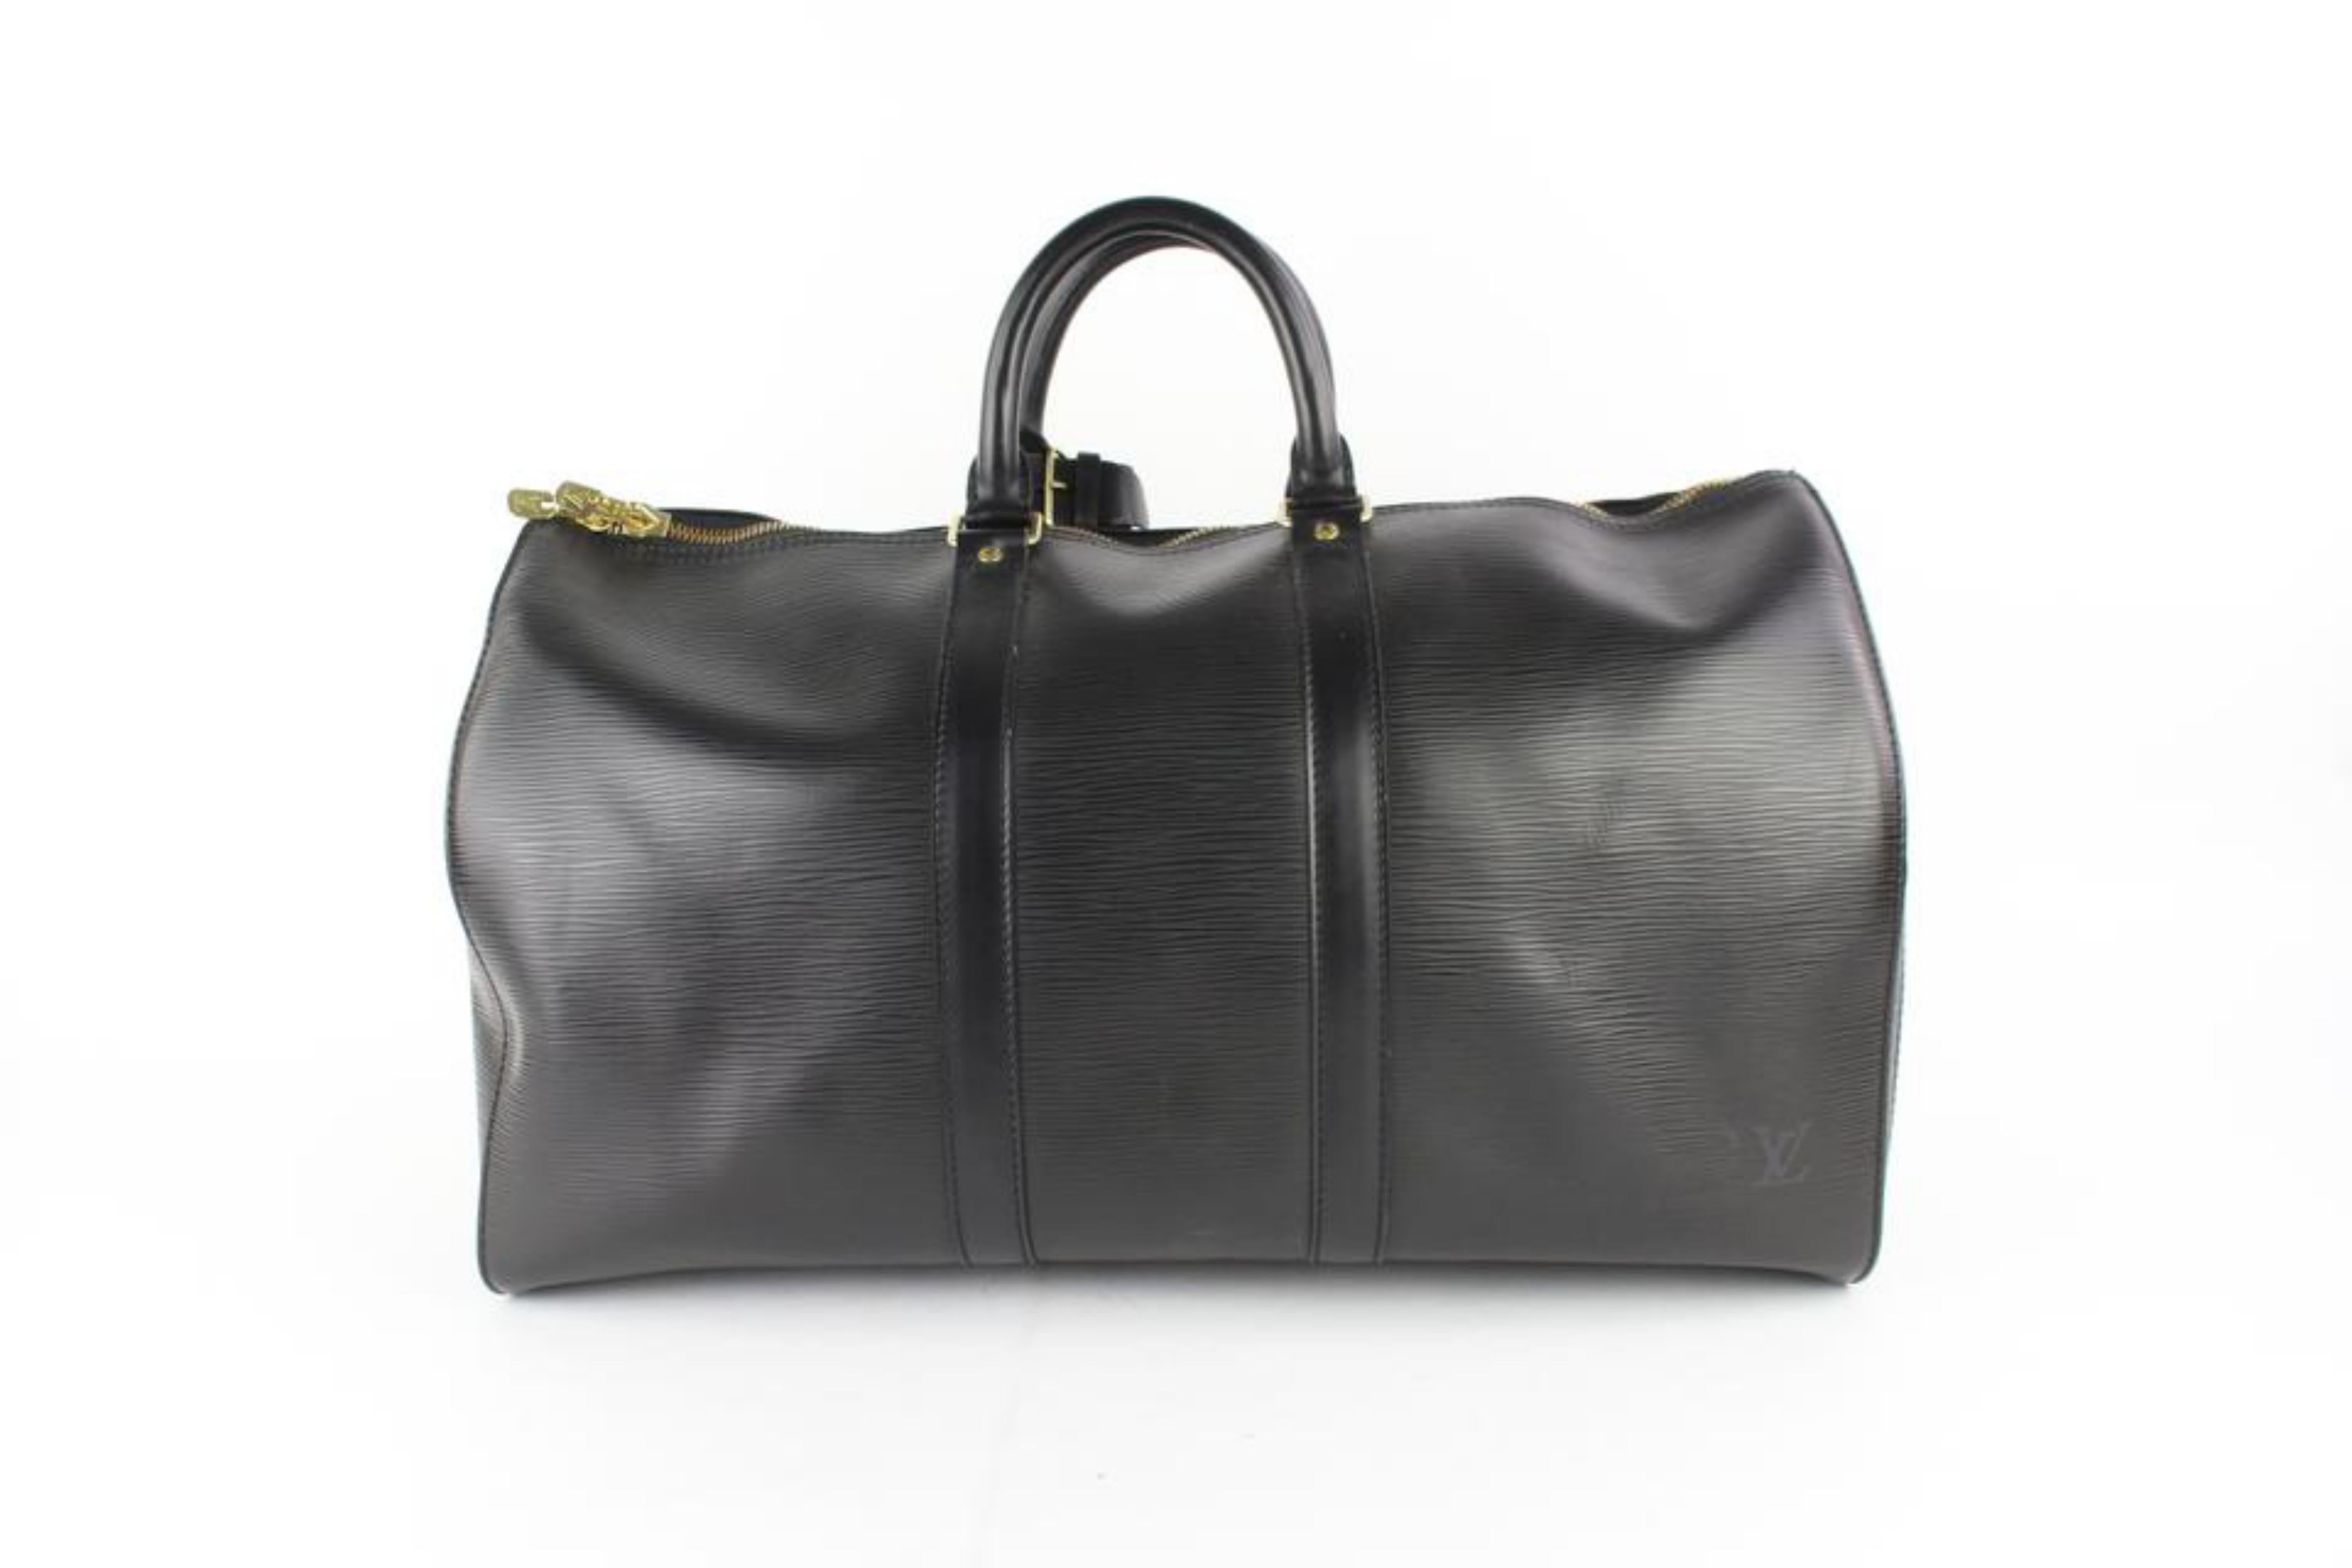 Louis Vuitton Keepall Duffle Noir 45 5lz0129 Black Leather Weekend/Travel Bag For Sale 4